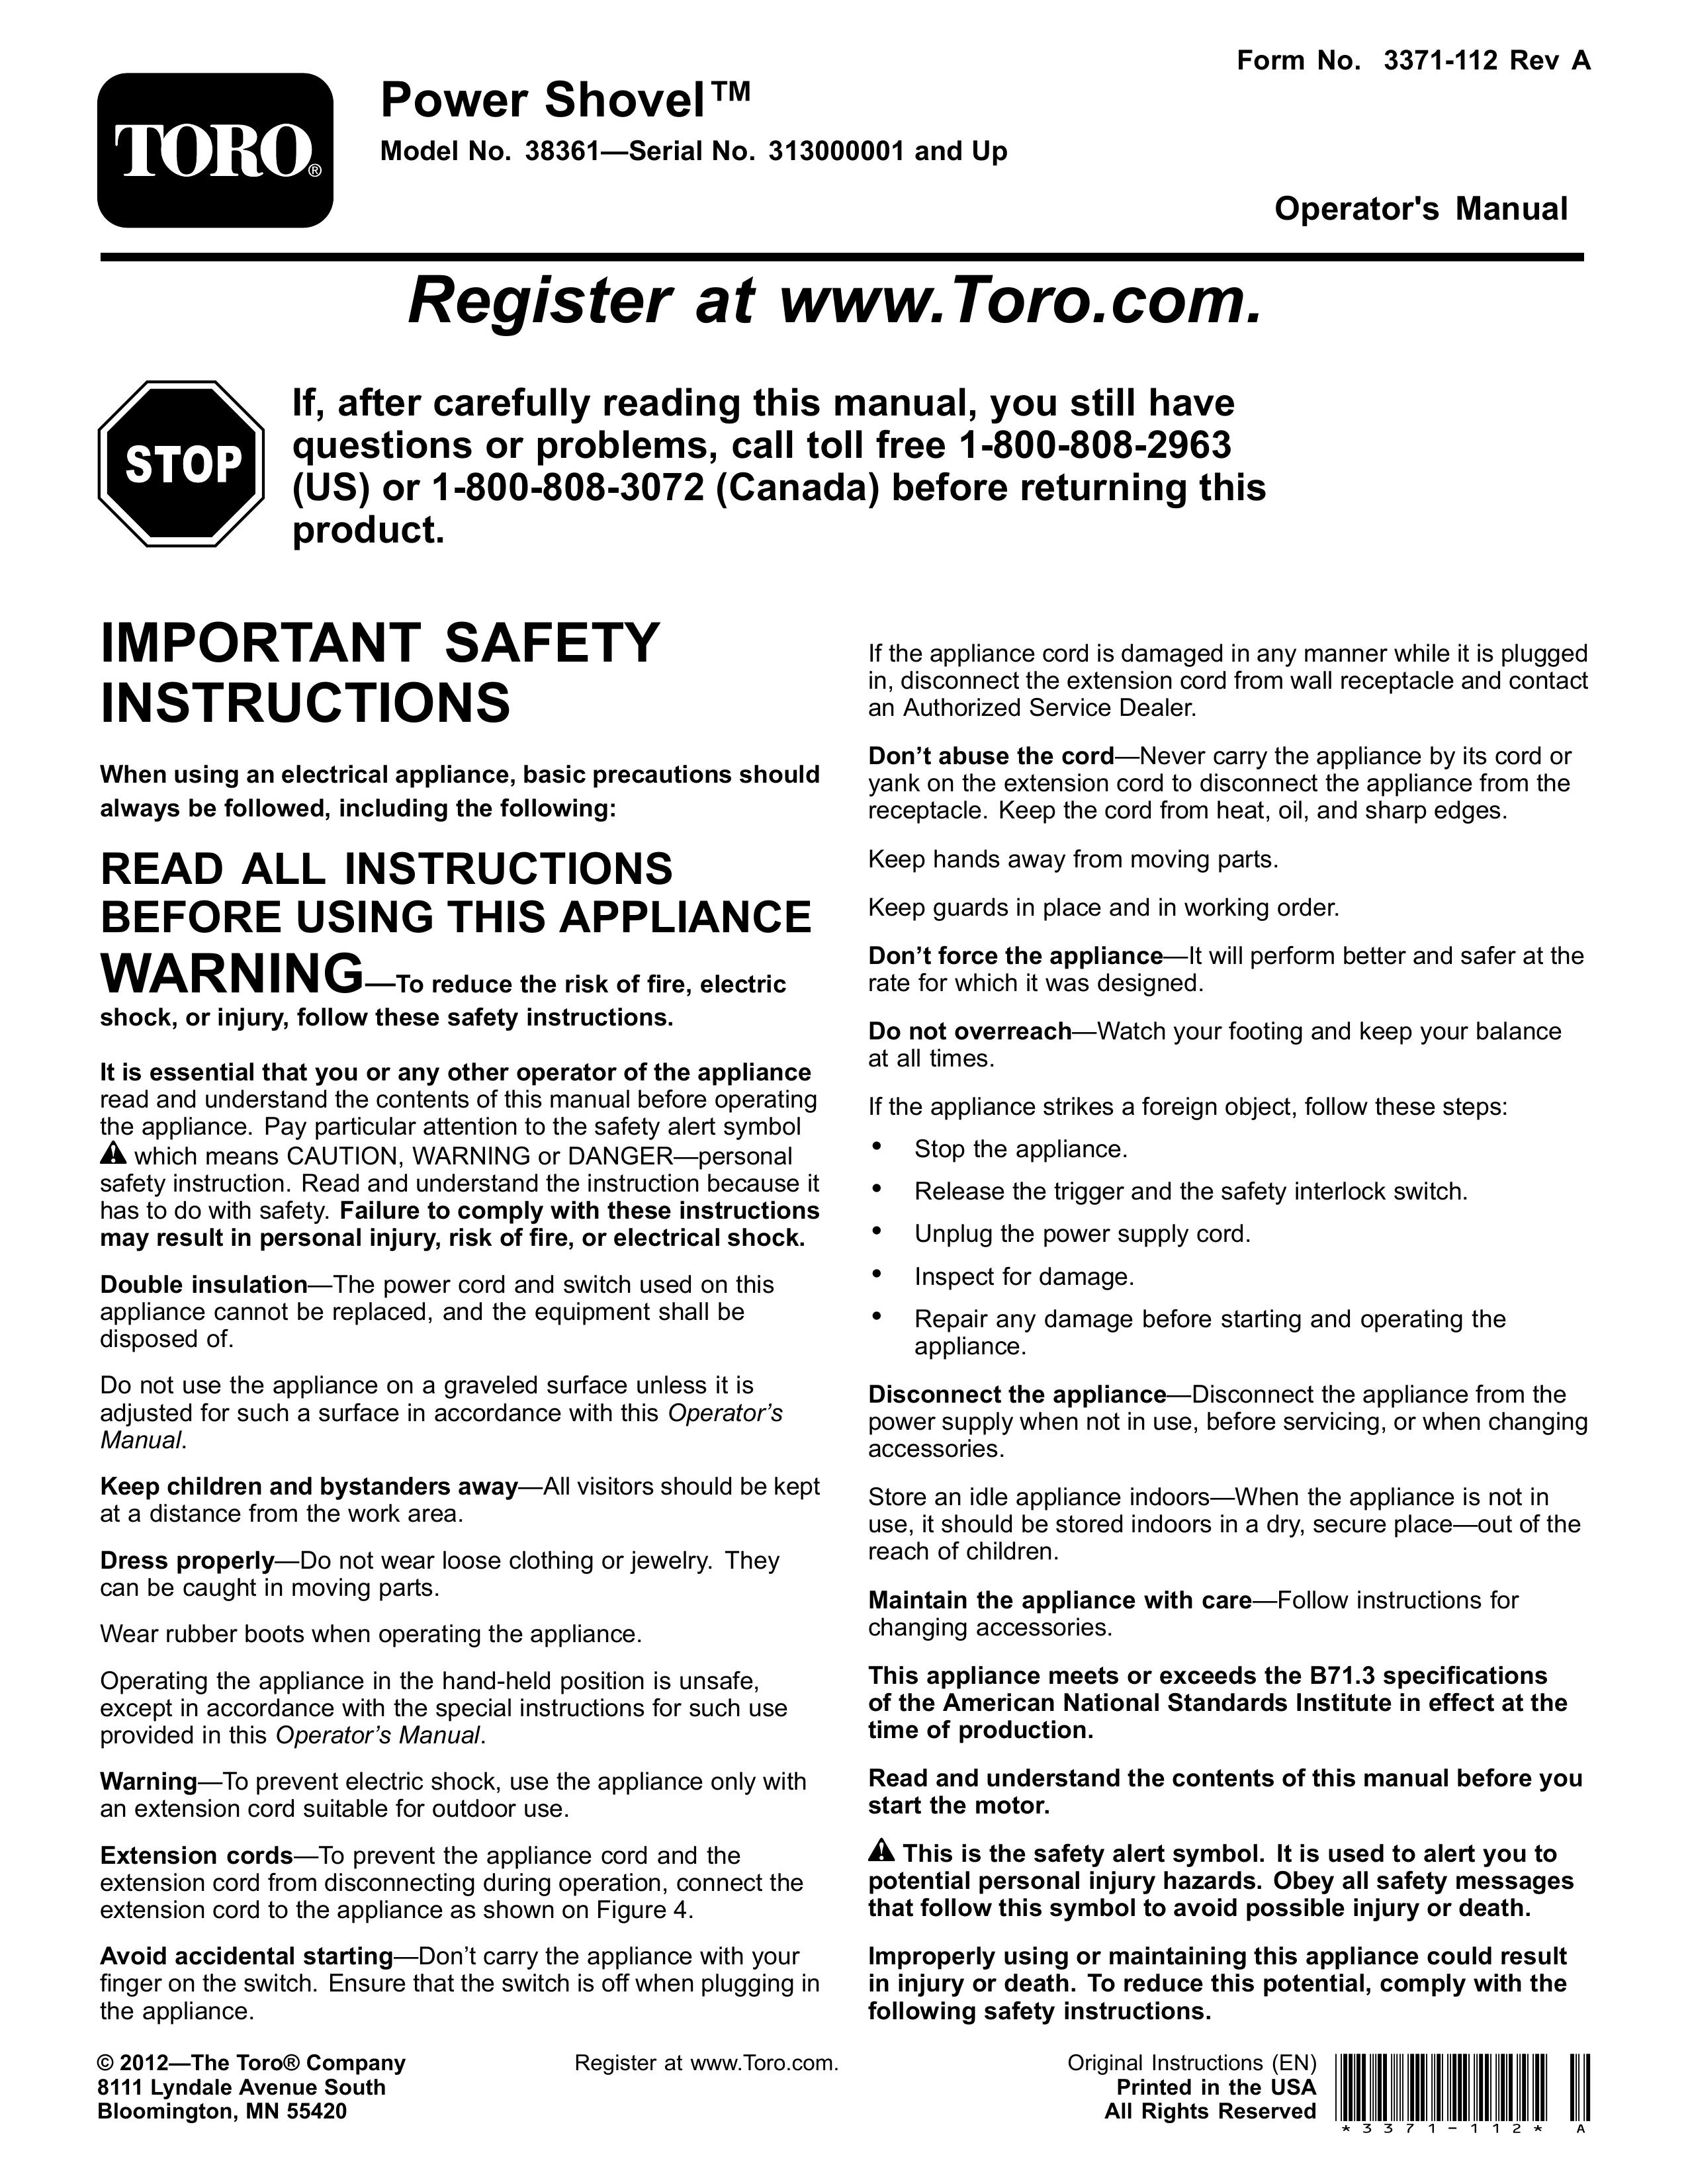 Toro 38361 Snow Blower User Manual